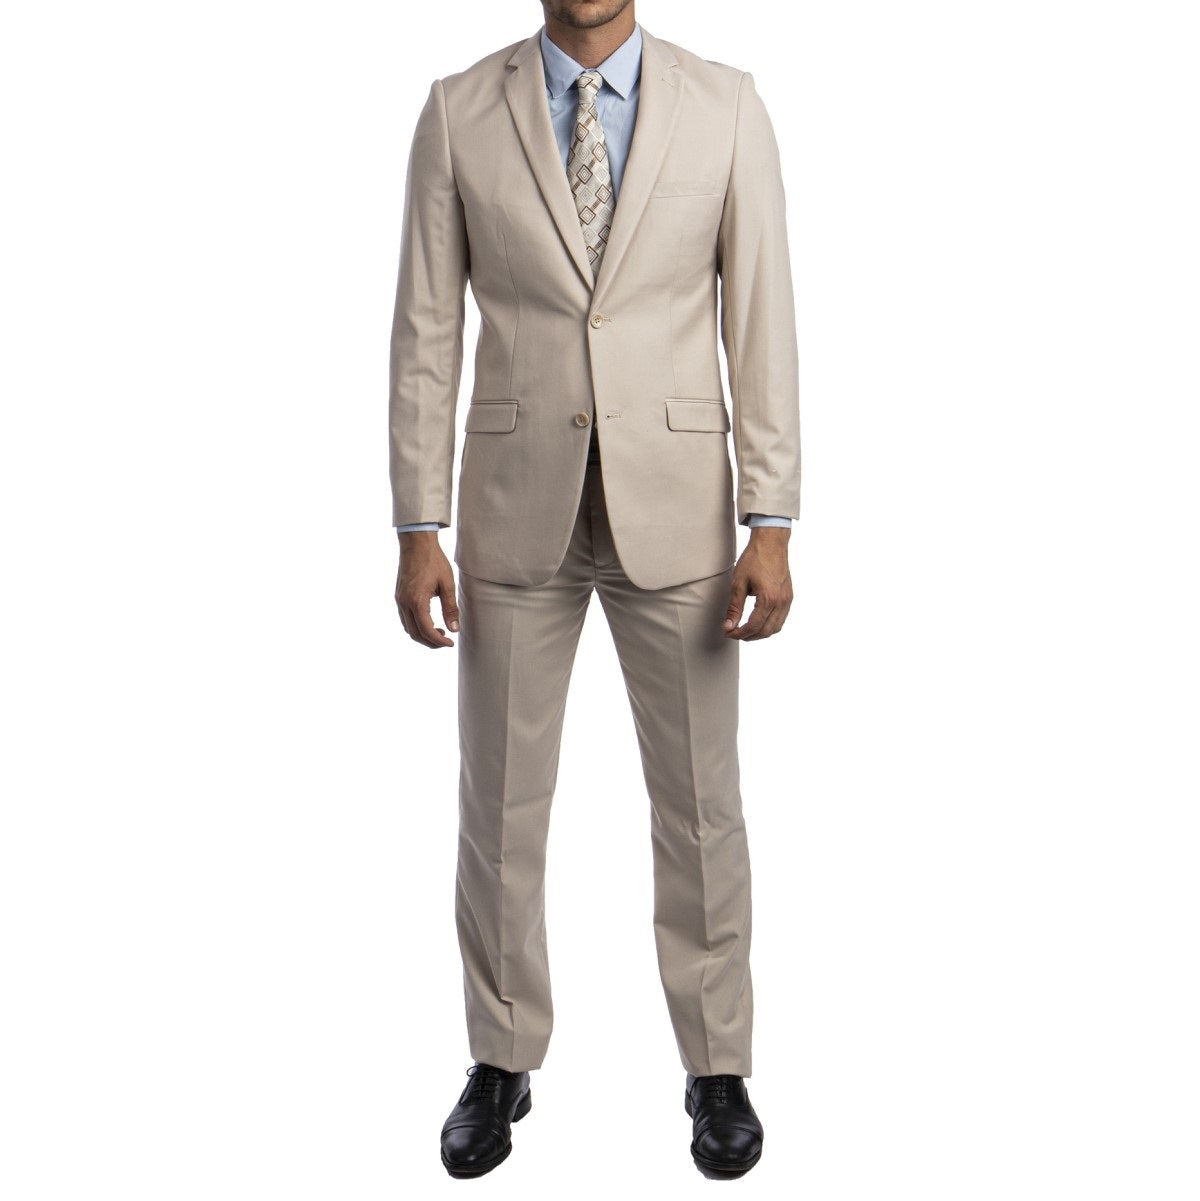 Traje Formal para Hombre TA-M276S-06 Tan - Formal Suit for Men